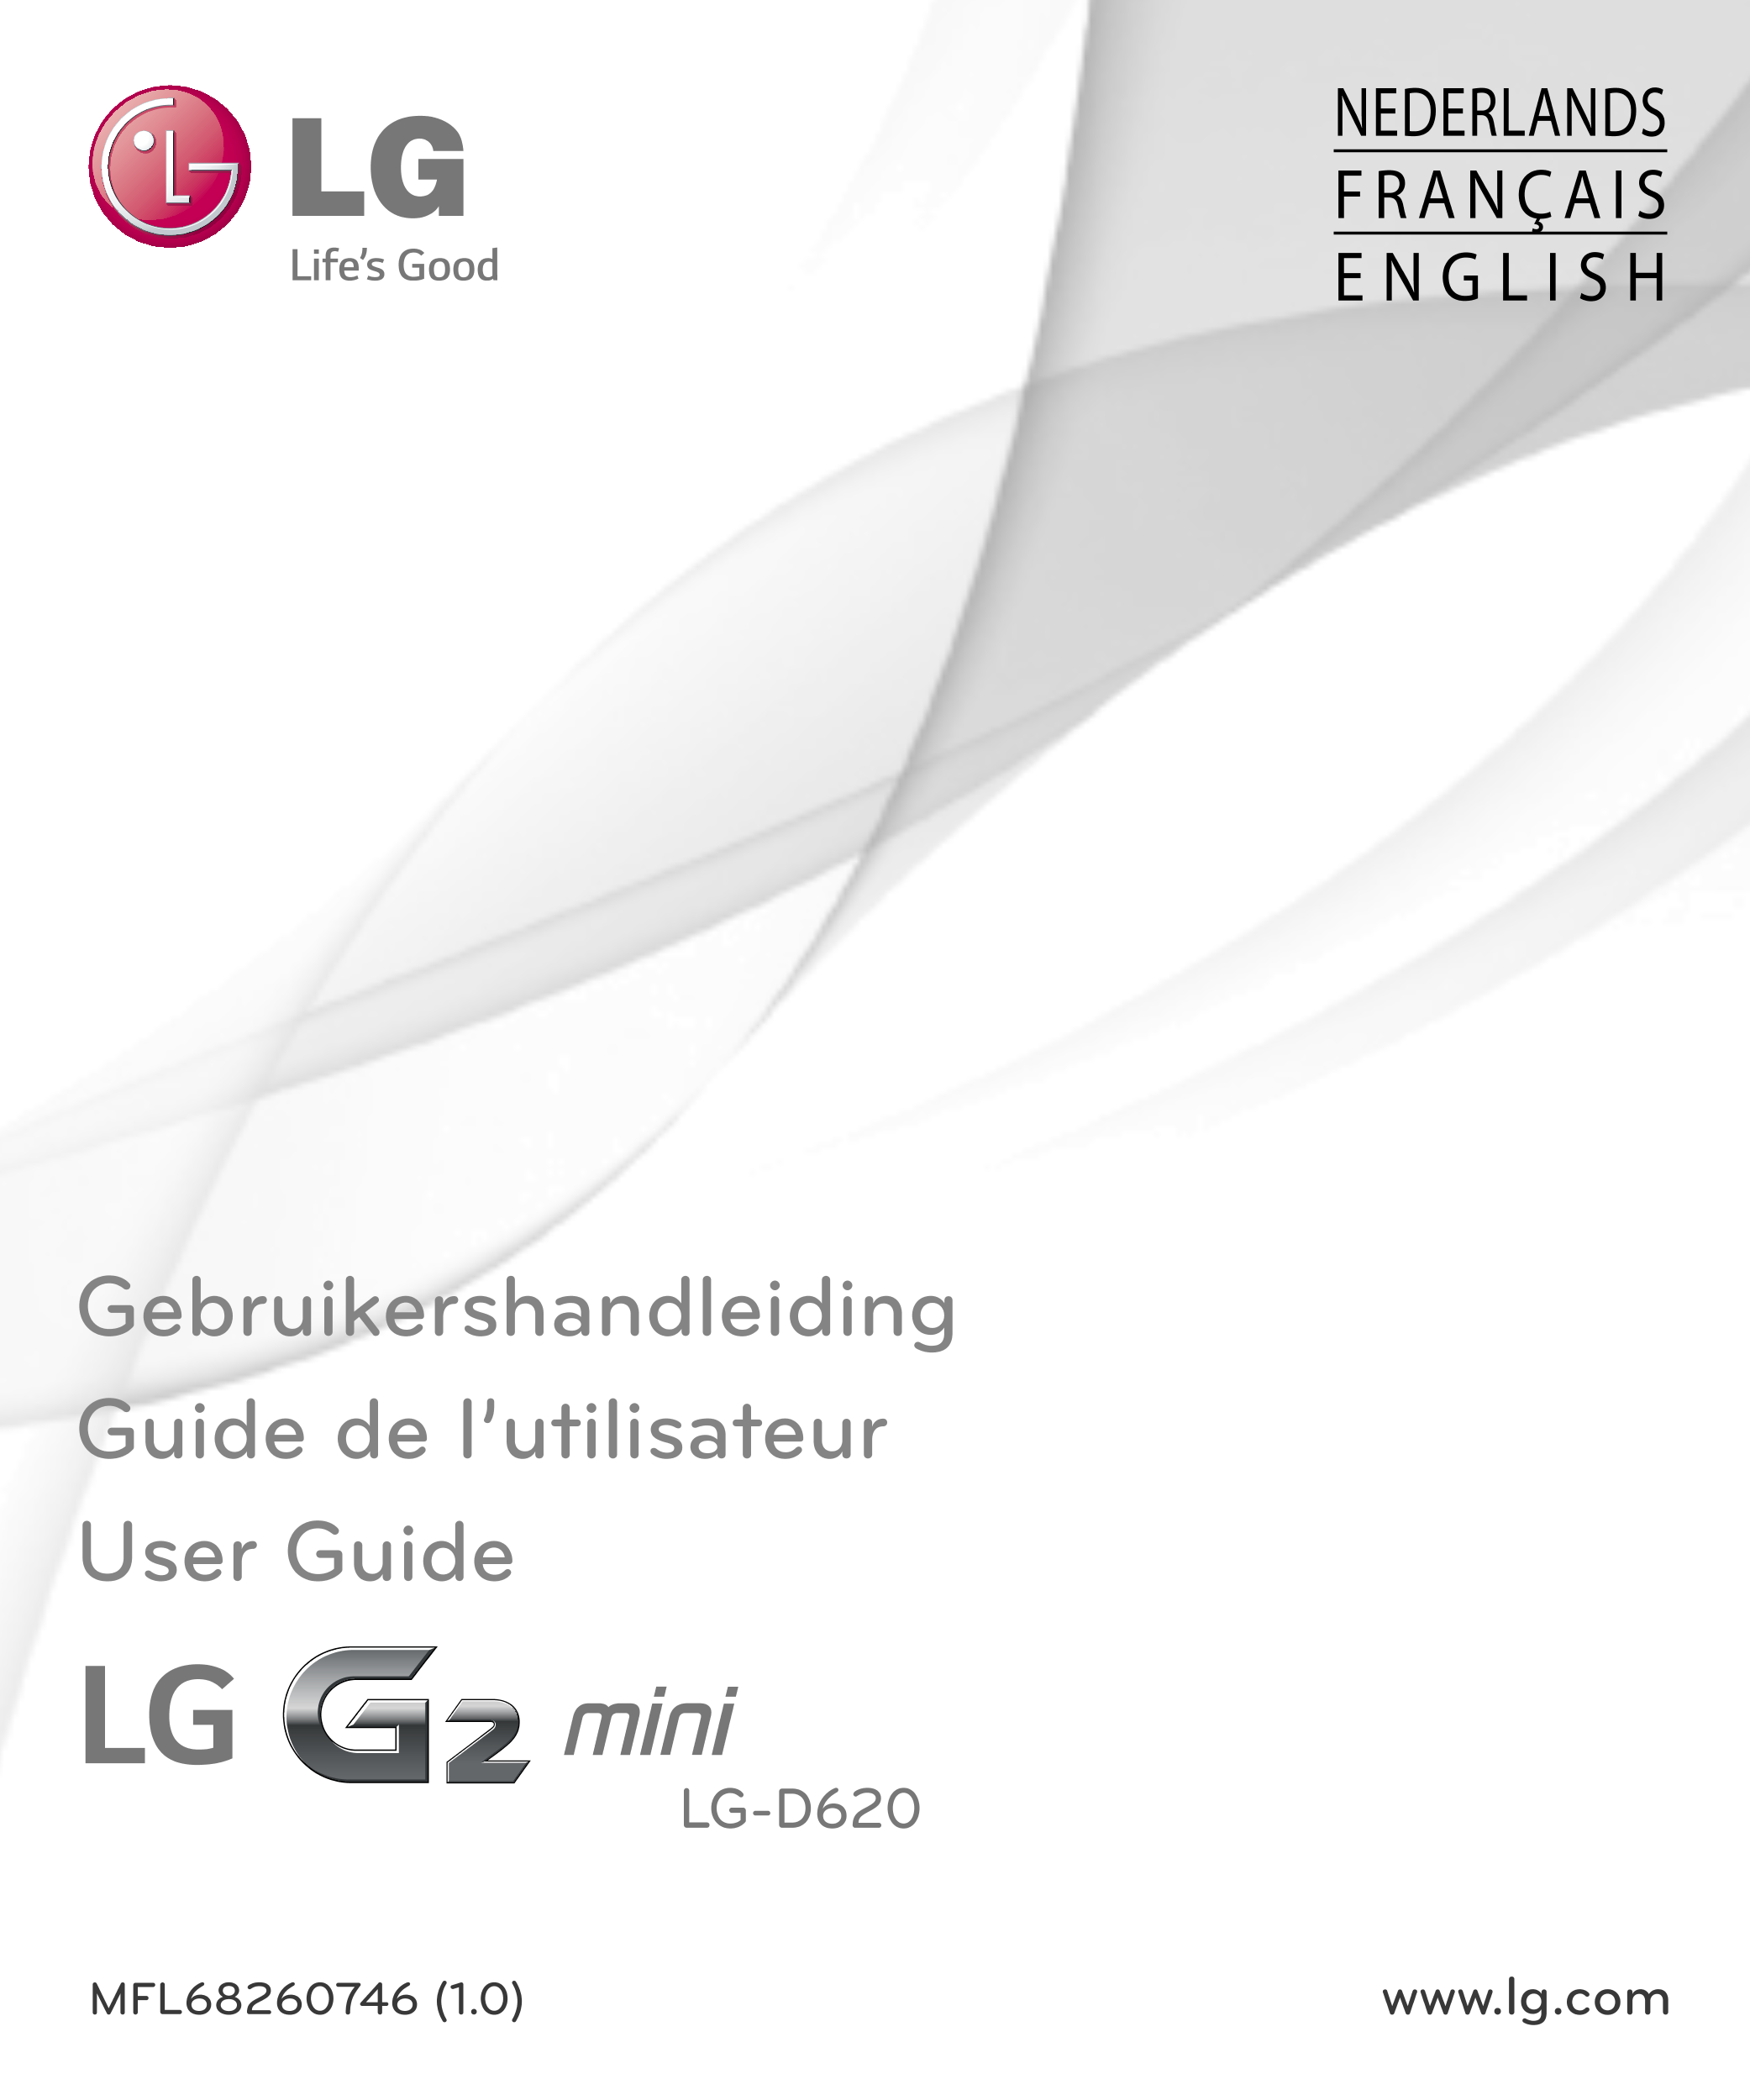 NEDERLANDS
FRANÇAIS
E N G L I S H
Gebruikershandleiding
Guide de l’utilisateur
User Guide
LG-D620
MFL68260746 (1.0)  www.lg.com